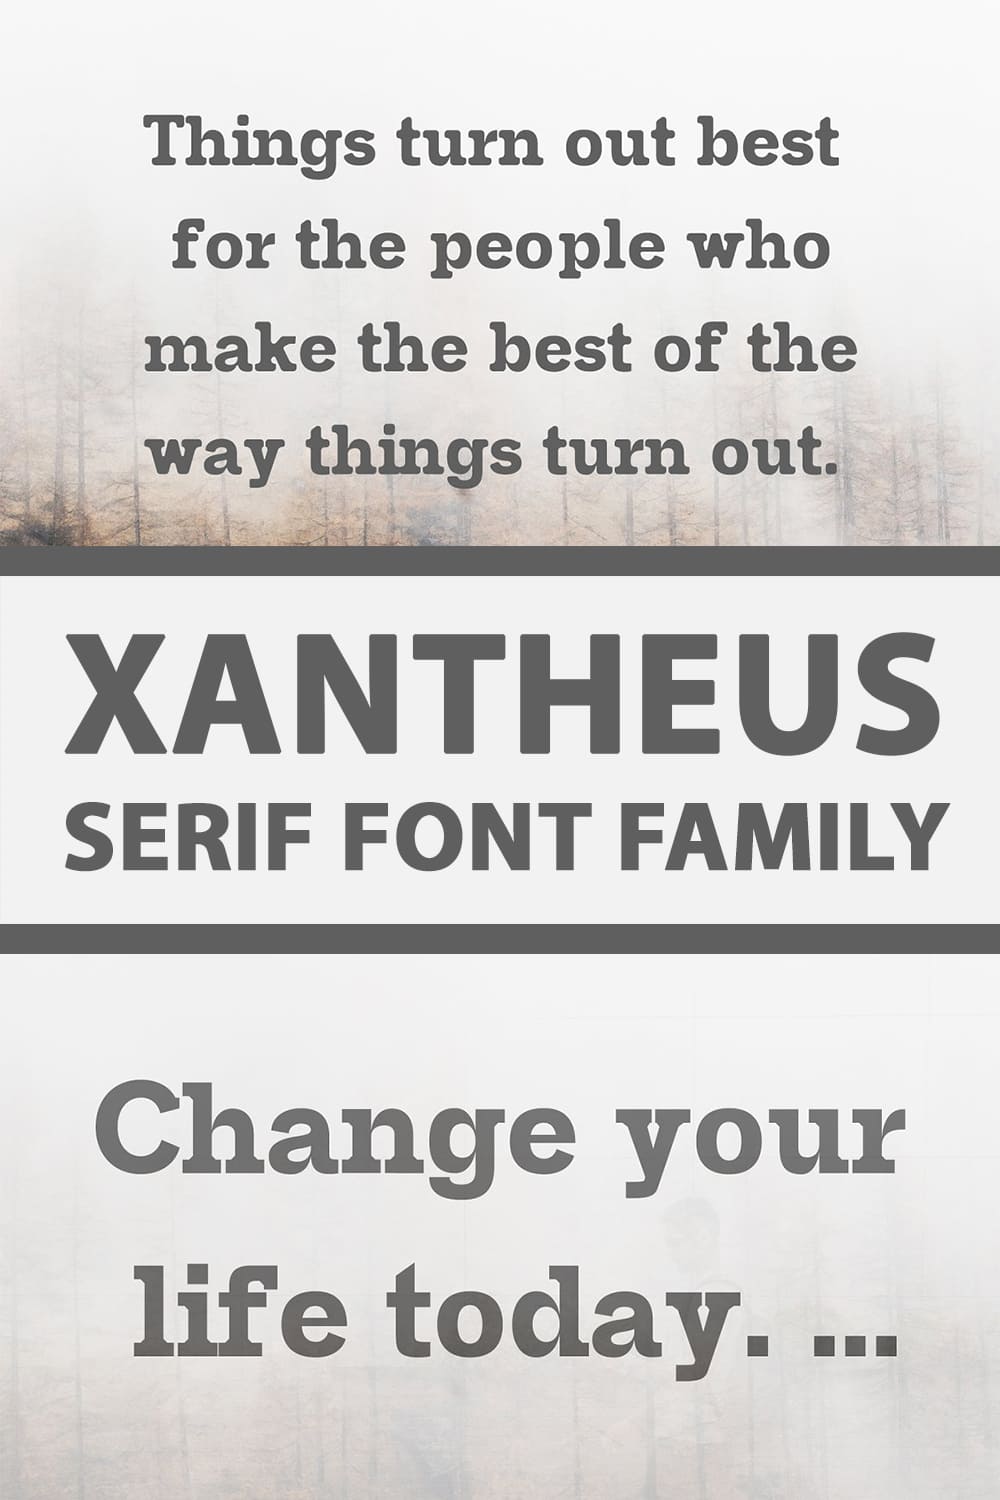 Xantheus Serif Font Family - Pinterest.